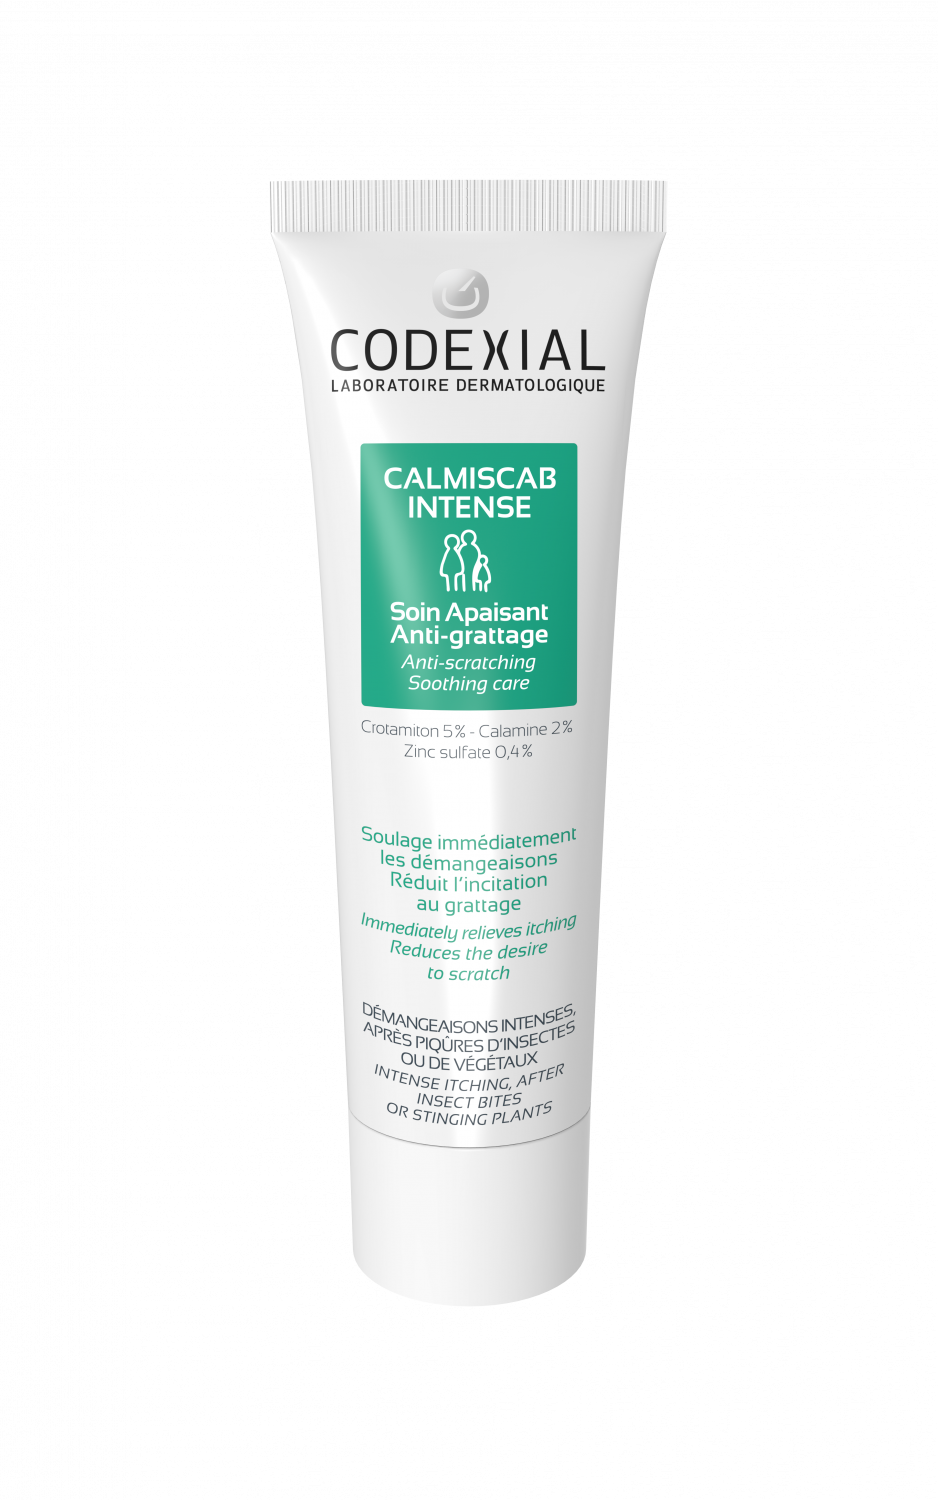 Calmiscab intense Soin apaisant anti-grattage Codexial - tube de 50 ml